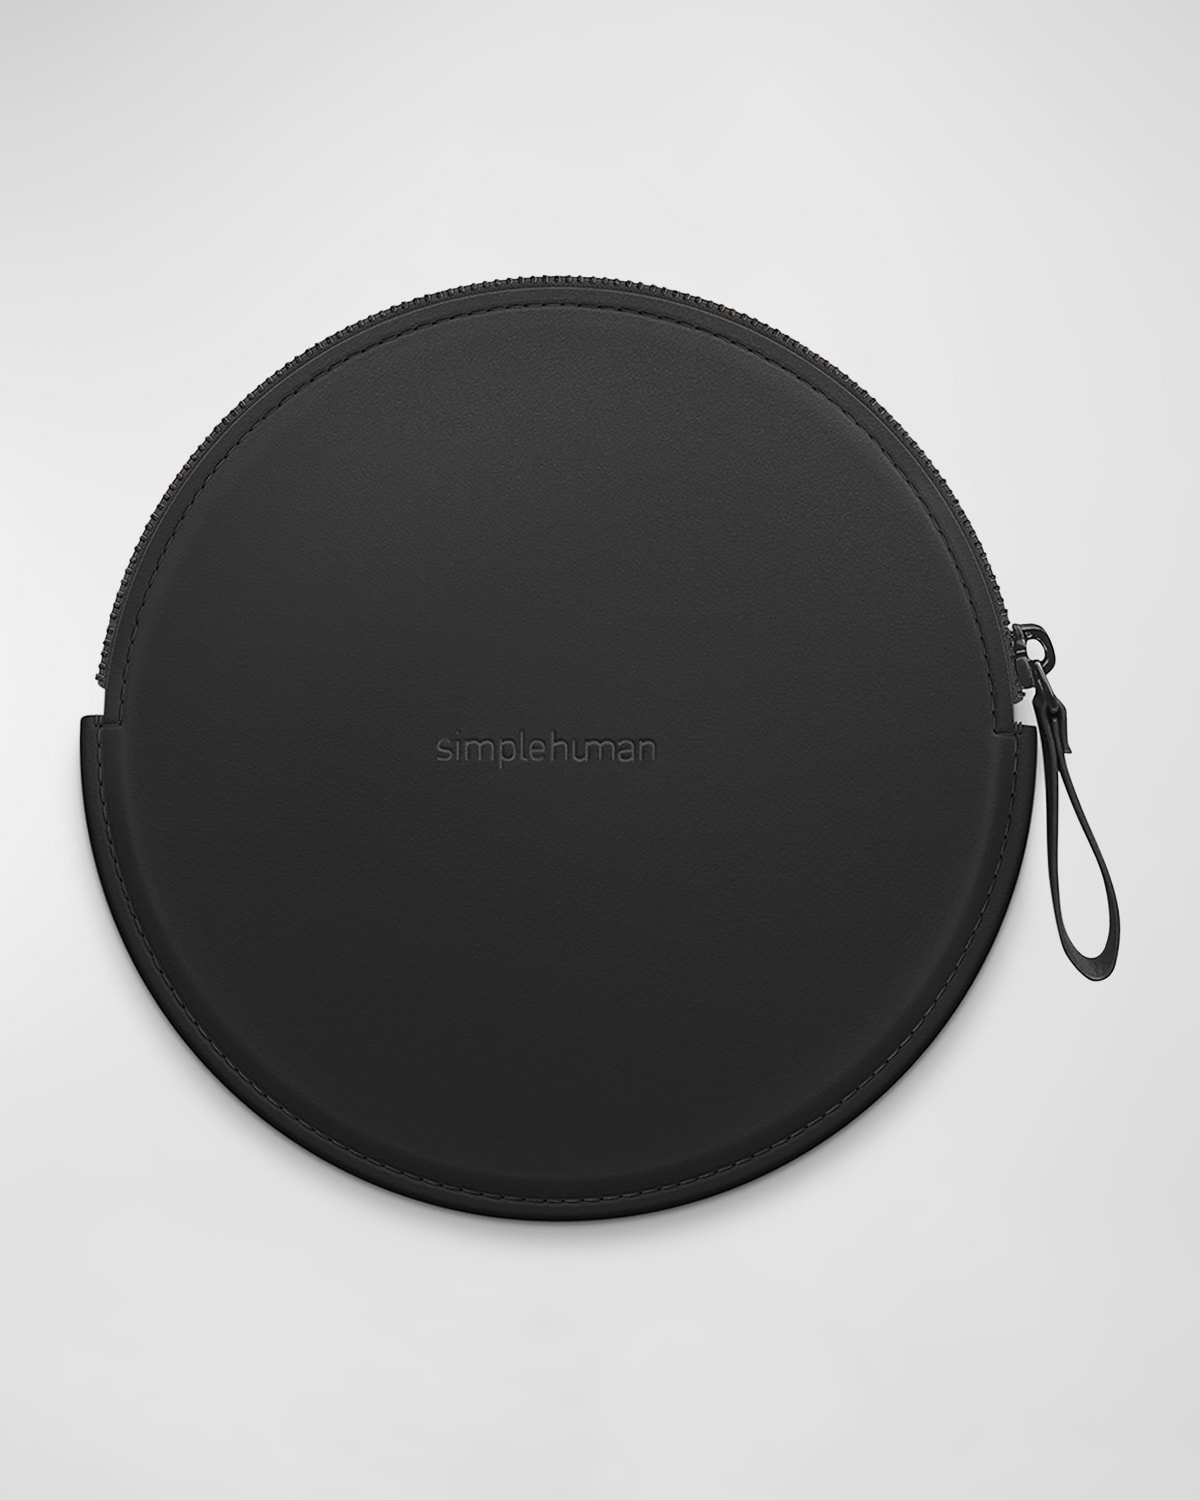 Simplehuman Sensor Mirror Compact Case In Black